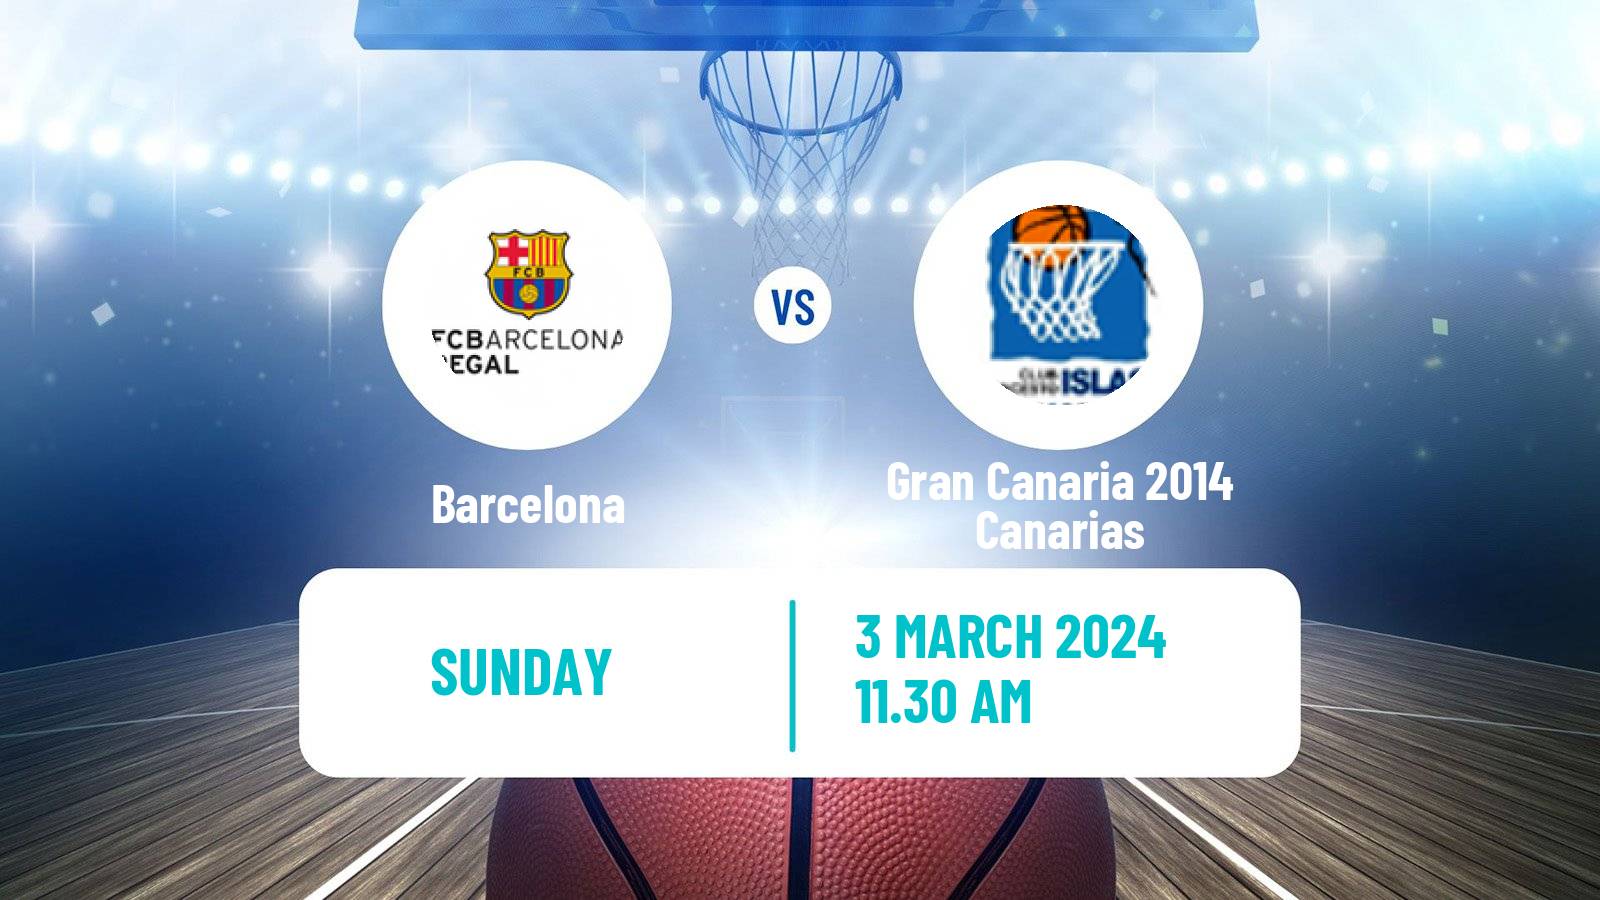 Basketball Spanish Liga Femenina Basketball Barcelona - Gran Canaria 2014 Canarias